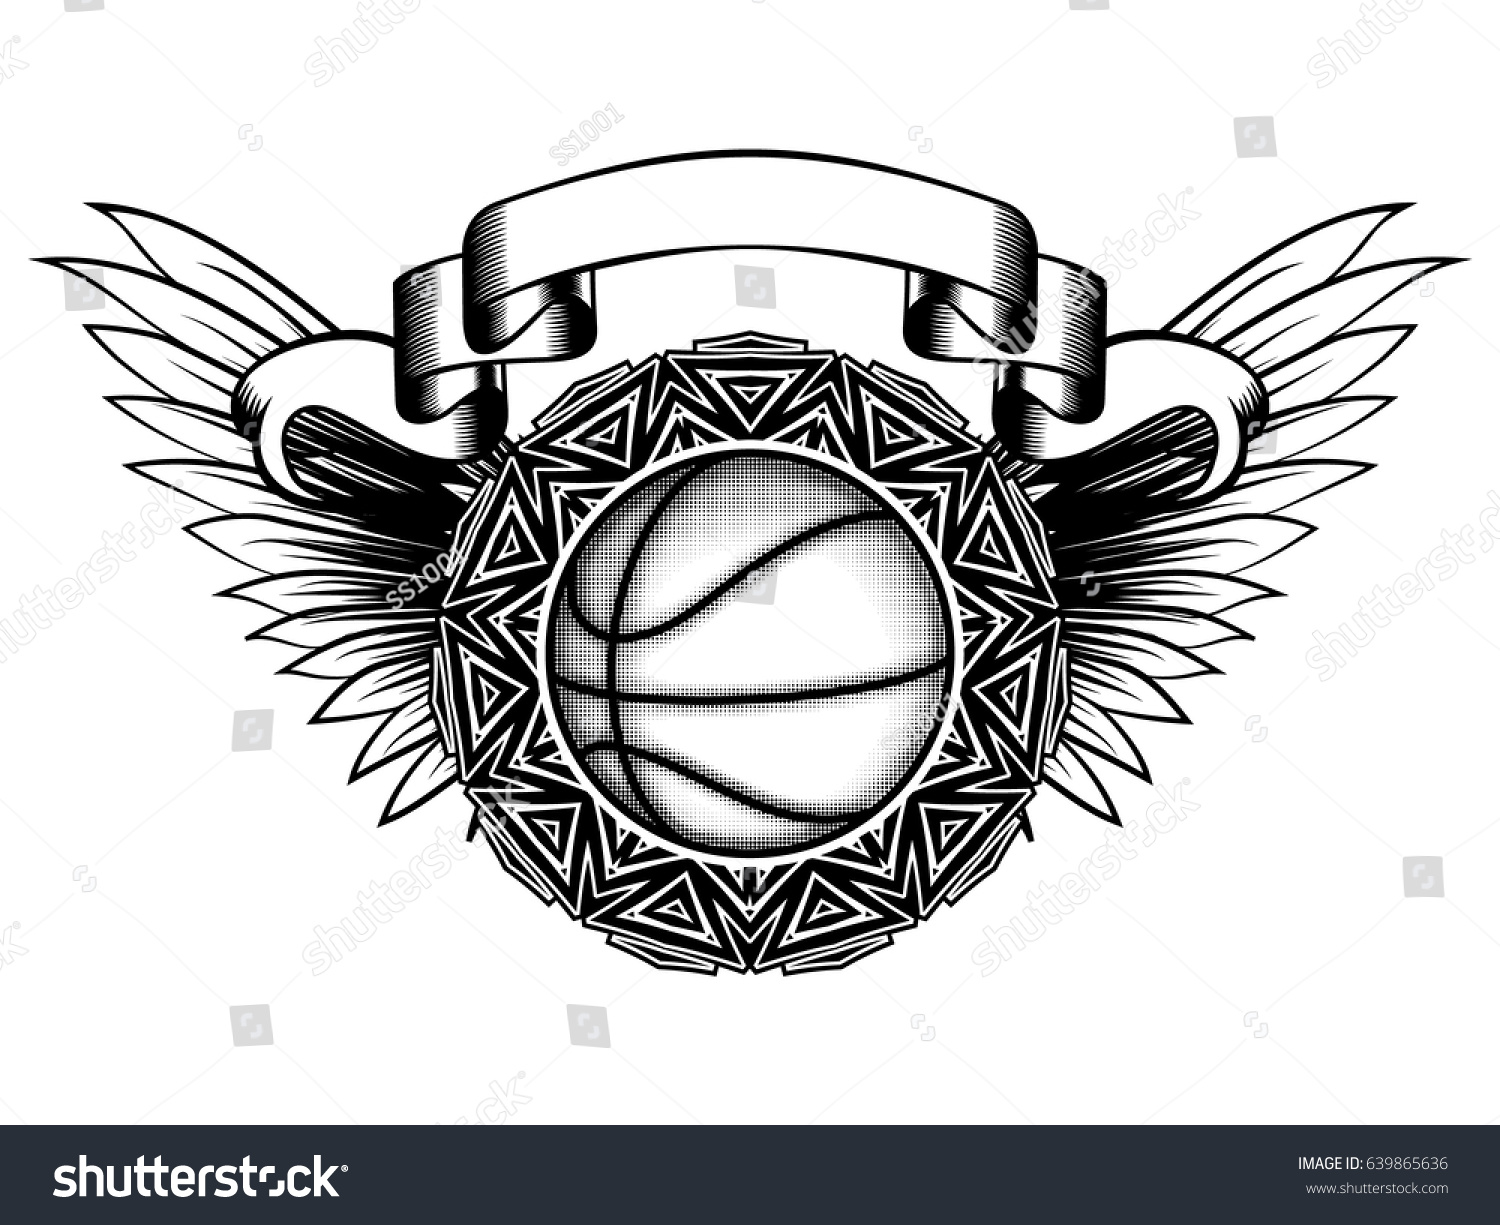 Abstract Vector Illustration Black White Basketball Stock Vector Royalty Free